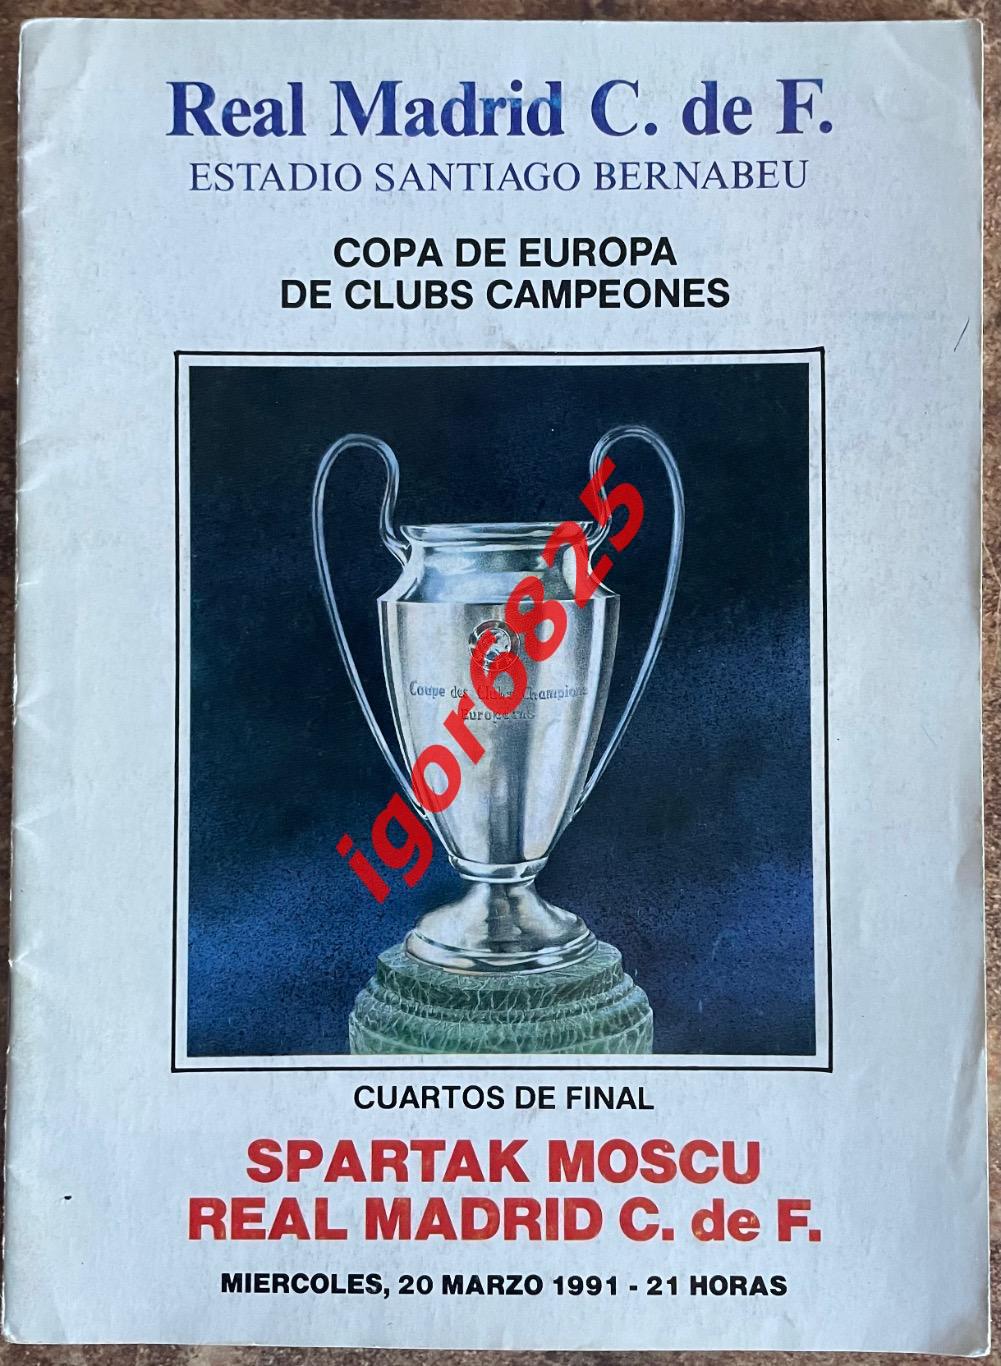 Реал Мадрид Испания - Спартак Москва. 20 марта 1991 года. Кубок Чемпионов УЕФА